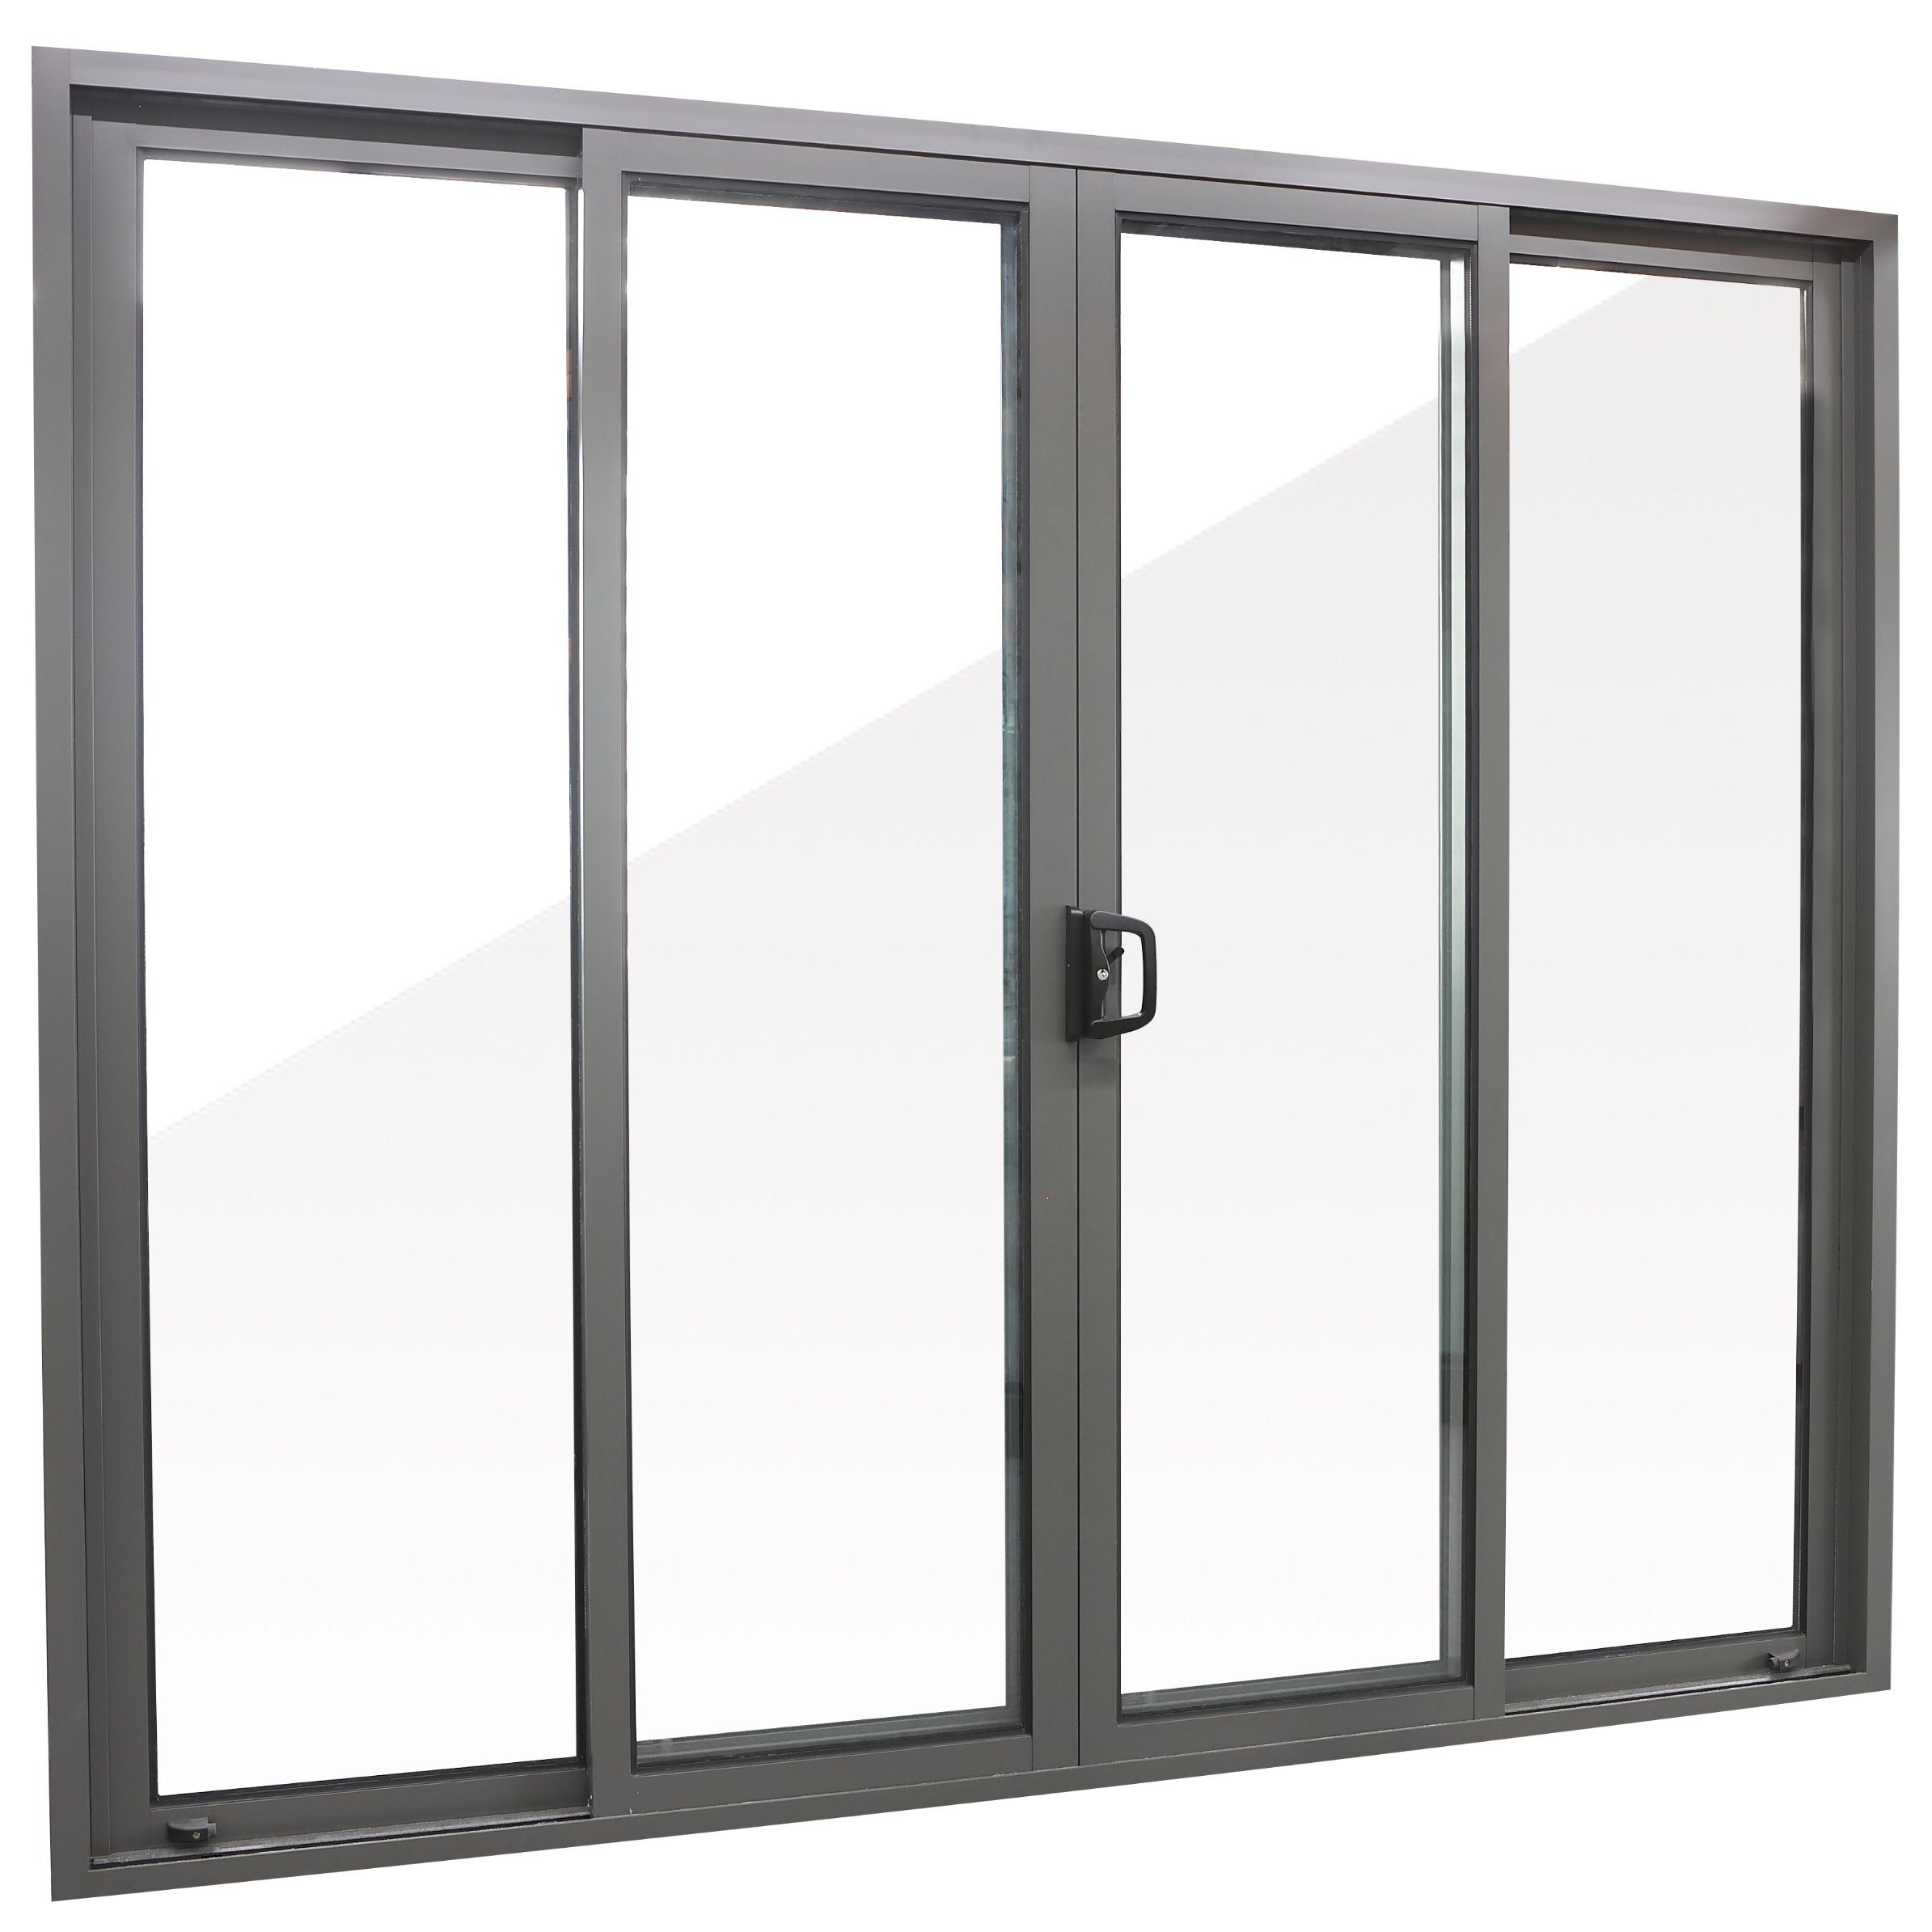 Quality Waterproof Aluminum Sliding Glass Doors for sale